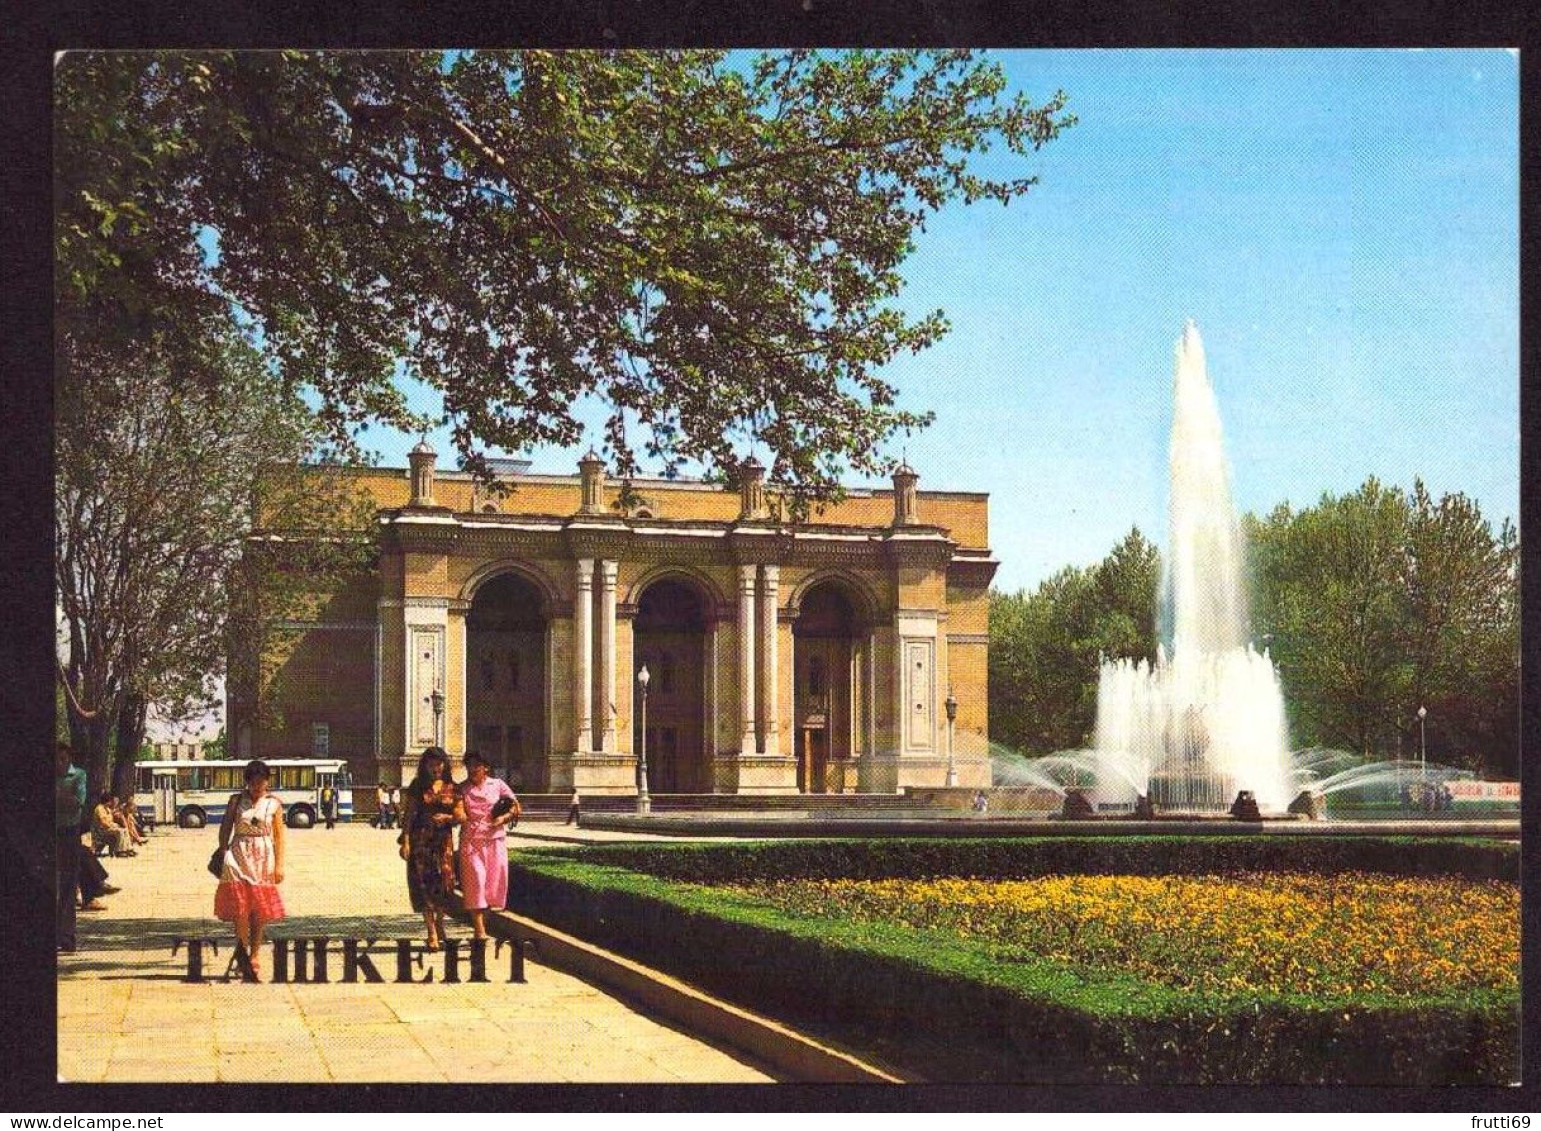 AK 212333 UZBEKISTAN - Tashkent - Teatralnaya Square - Usbekistan